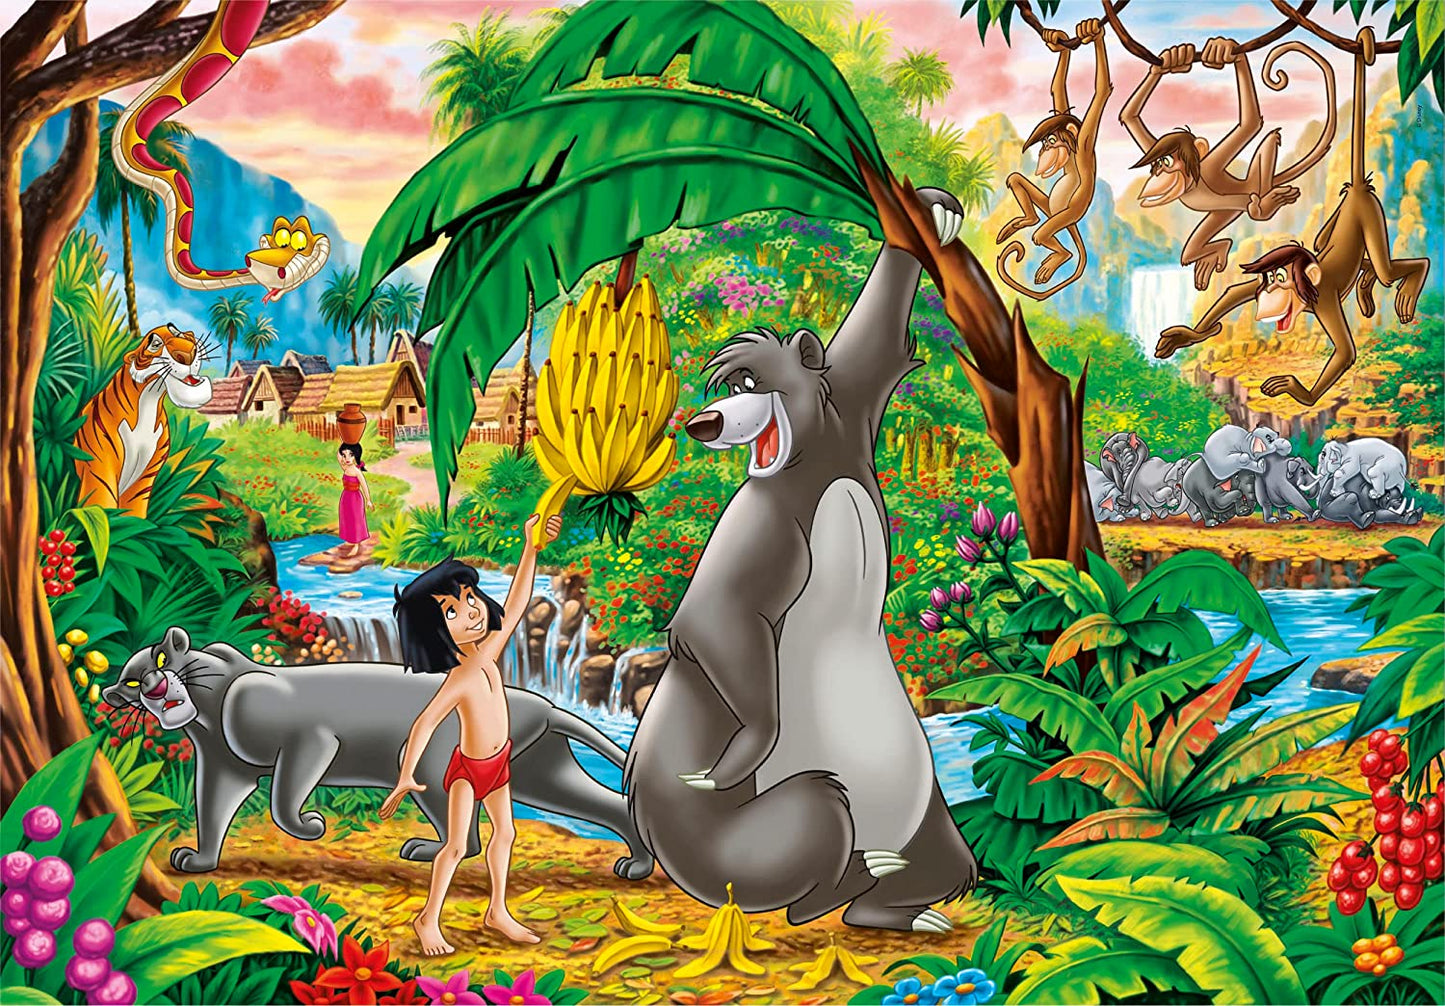 Disney Classics Puzzle Peter Pan & Das Dschungelbuch 2x60 Teile für Kinder Clementoni